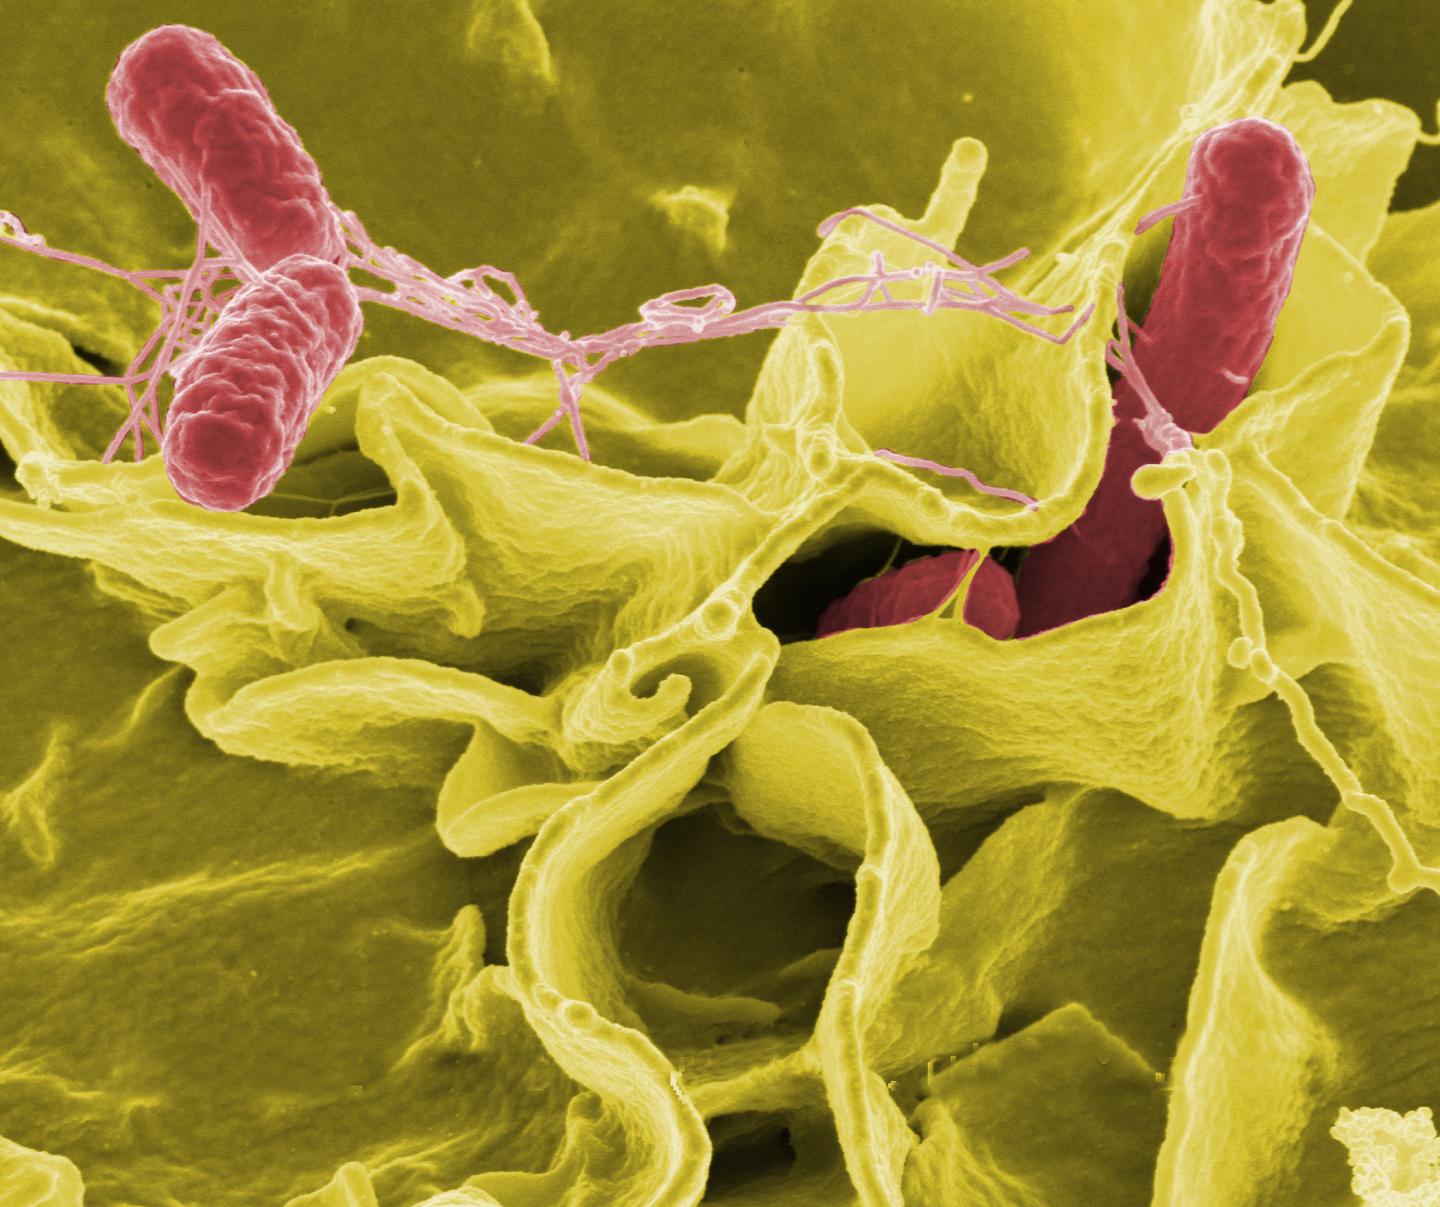 <em>Salmonella</em> Bacteria Invading Cultured Human Cells